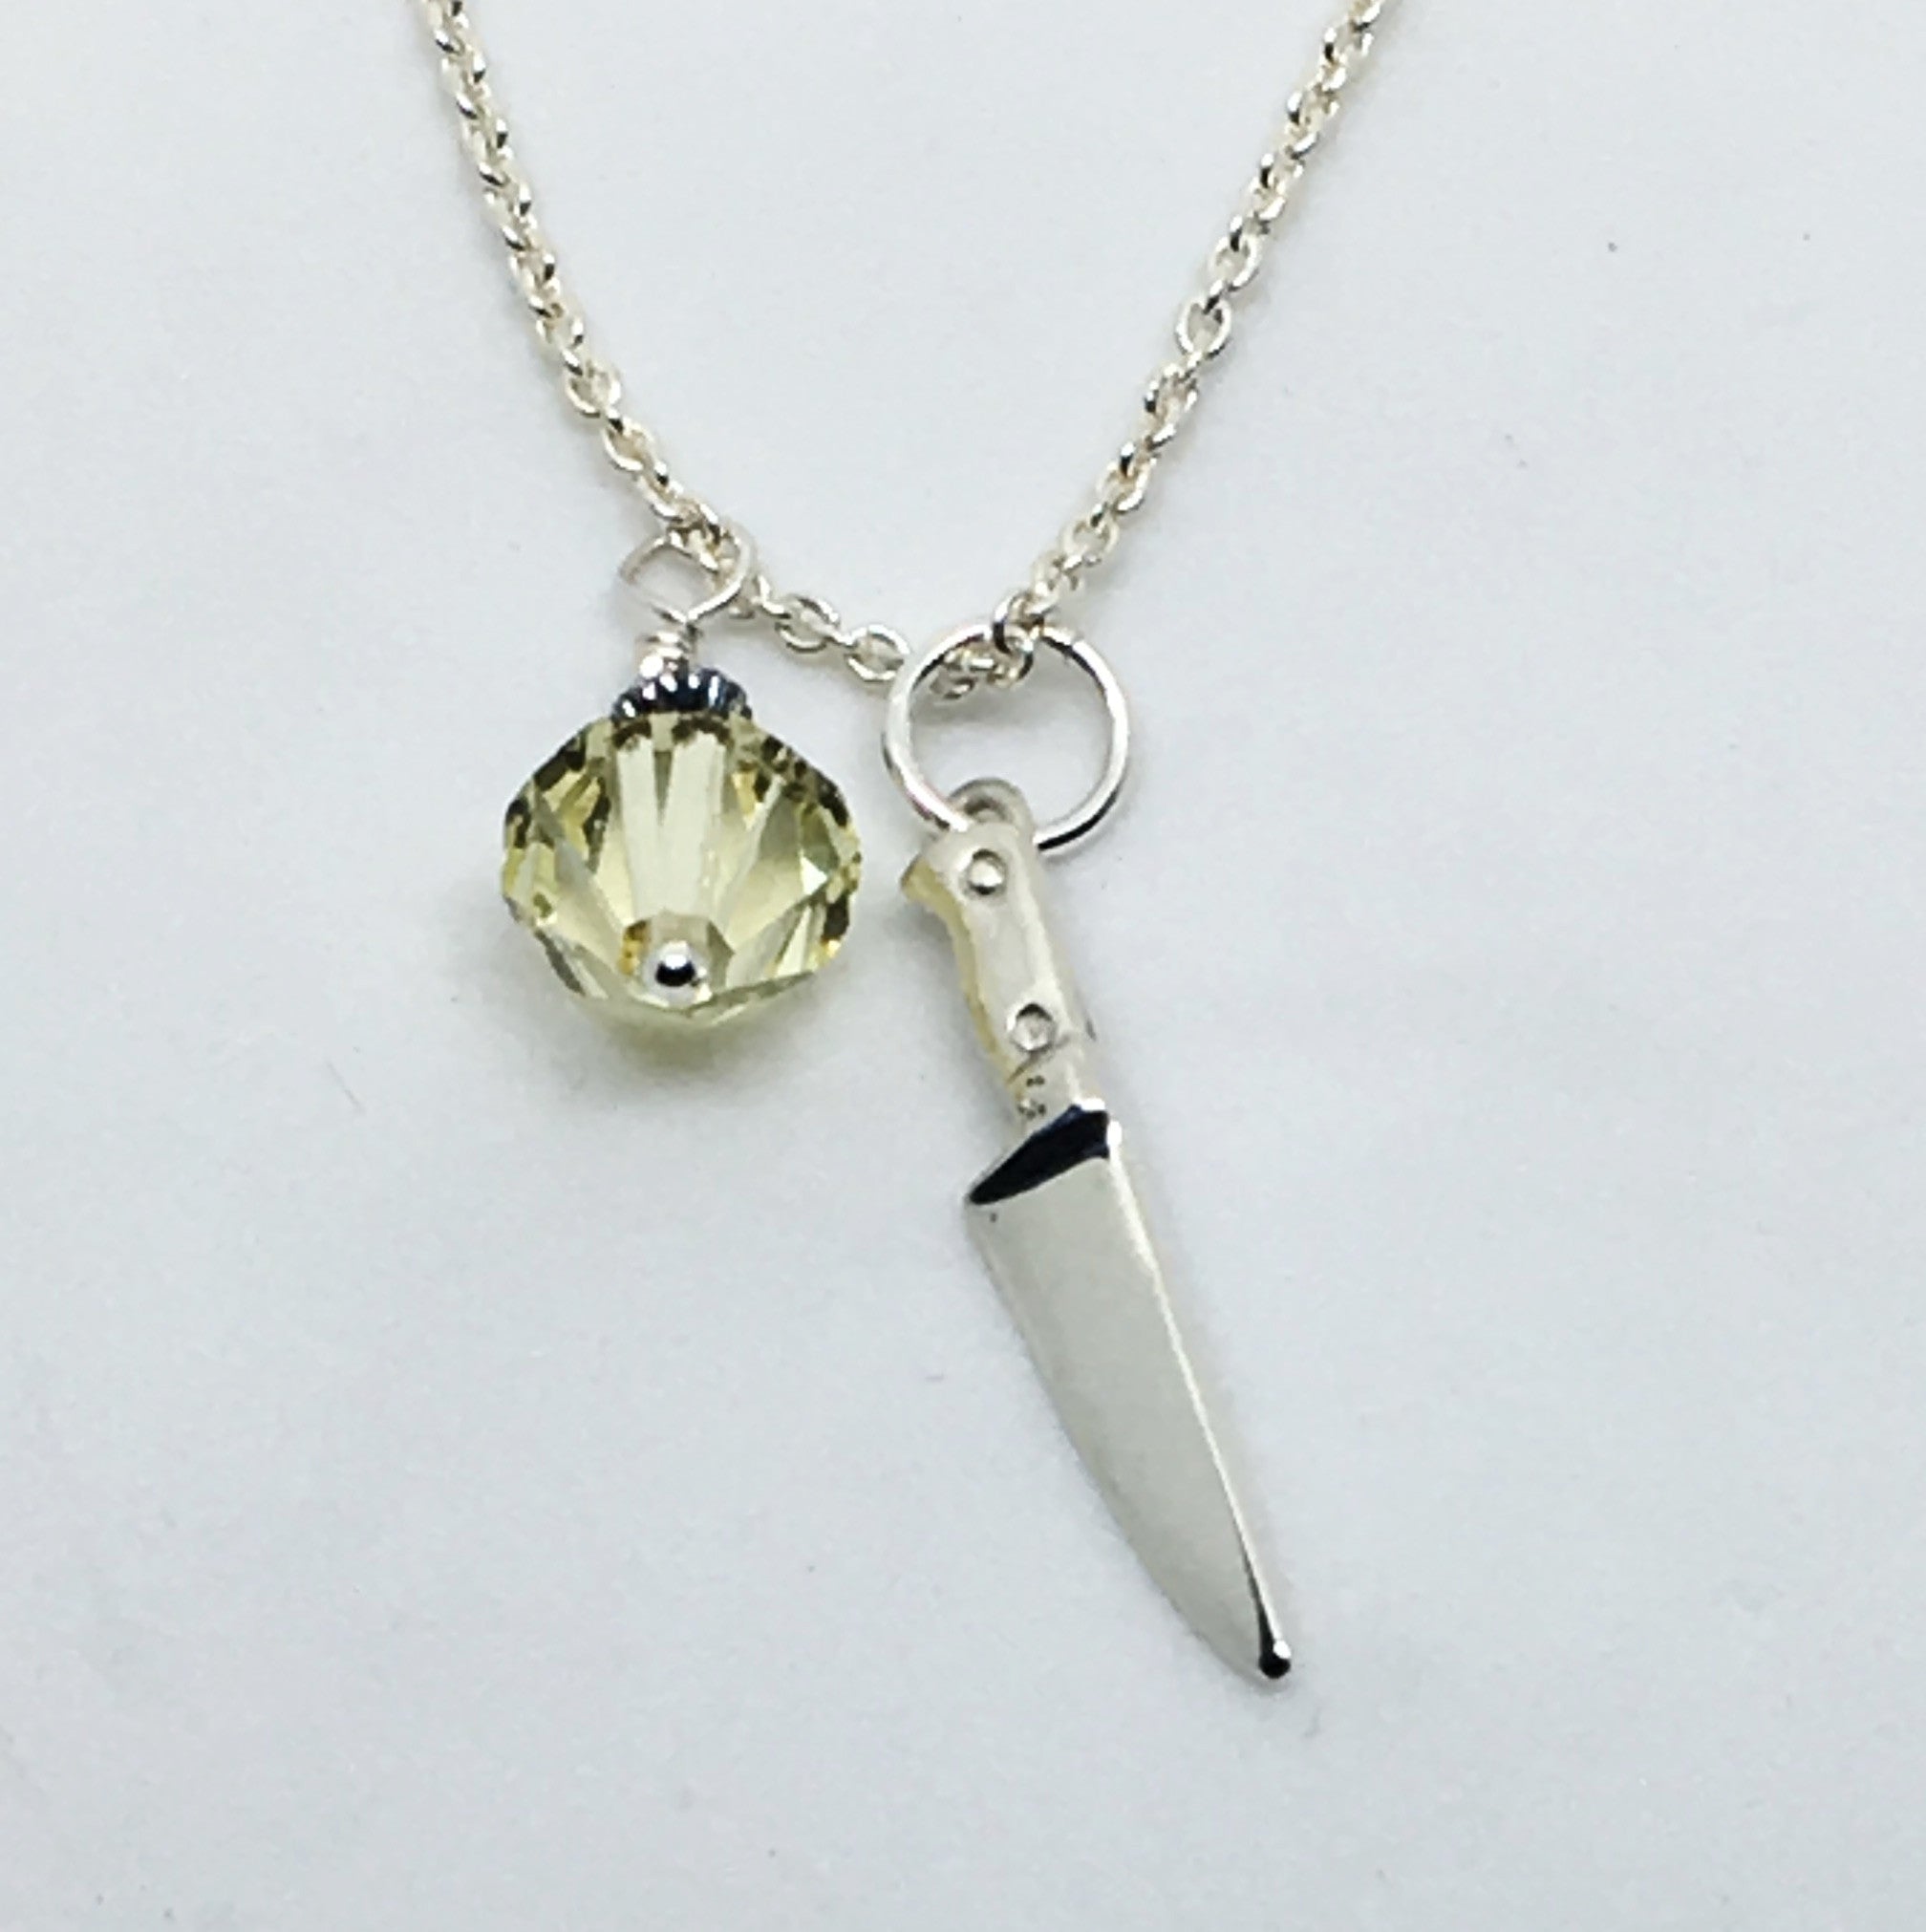 Buy Necklace Pendant Mini Cleaver Knife